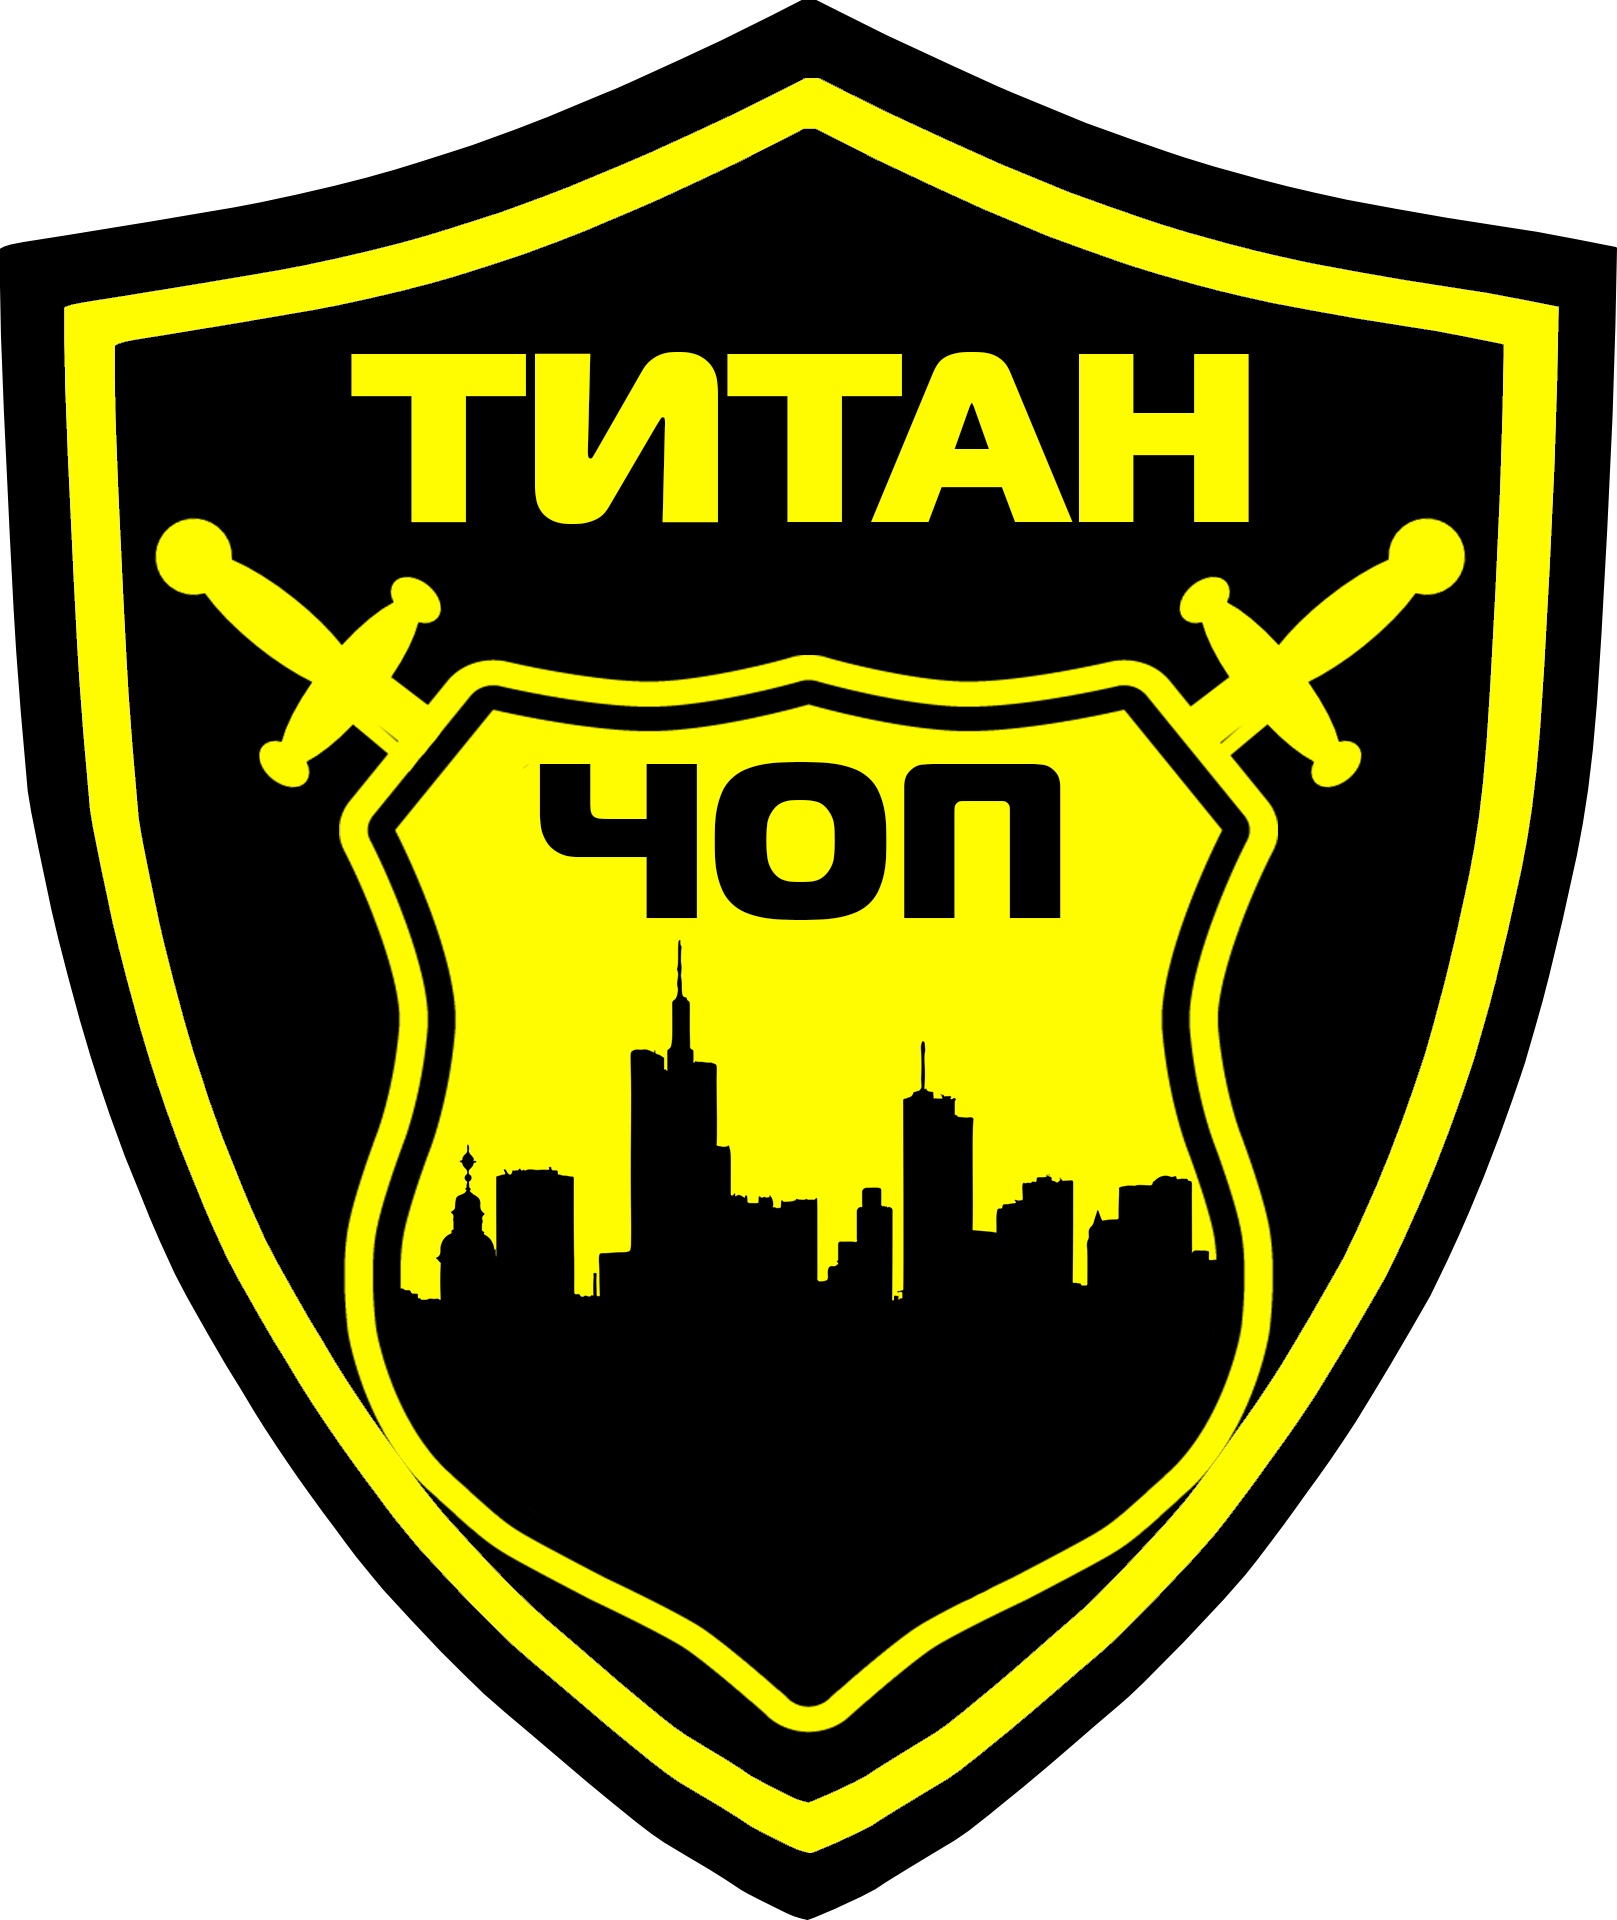 Ооо частная охранная организация. Чоп охрана Титан. Логотип охранного предприятия. Чоп Титан логотип. Частная охранная организация эмблема.